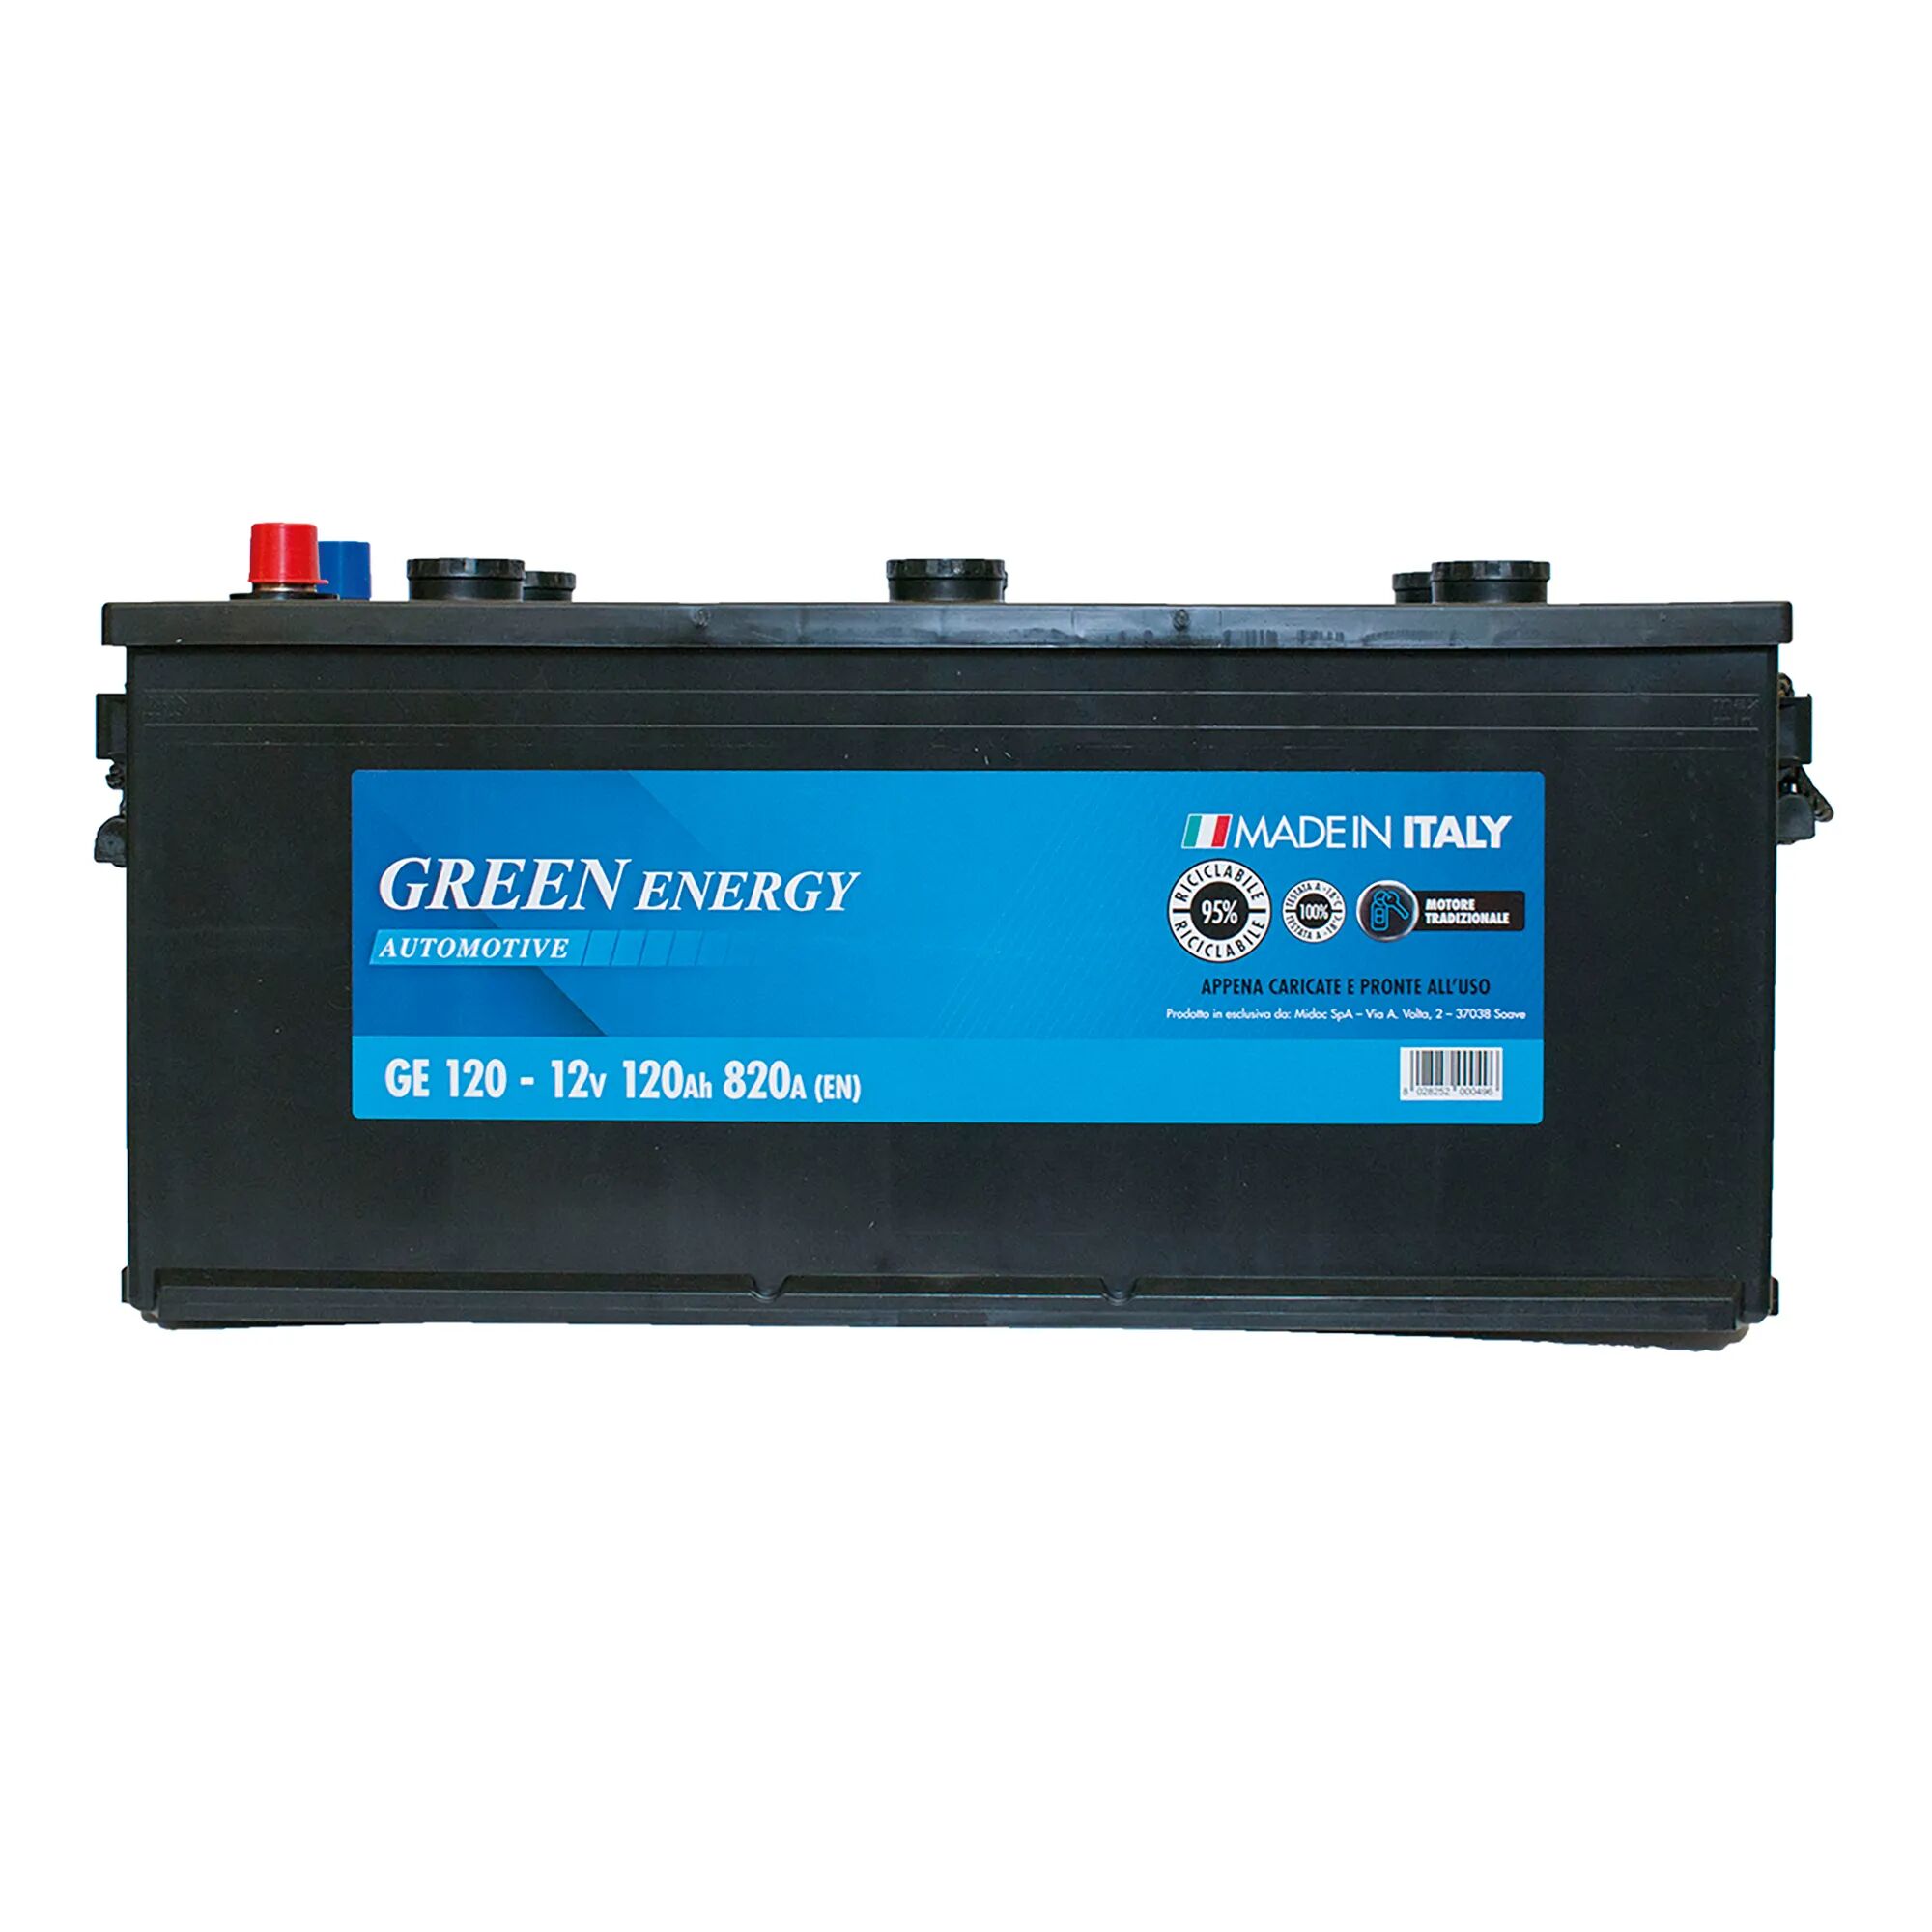 green energy batteria autocarro 120 ah greenenergy spunto 820a 510x175x225 mm (lxpxh) peso 32,60 kg